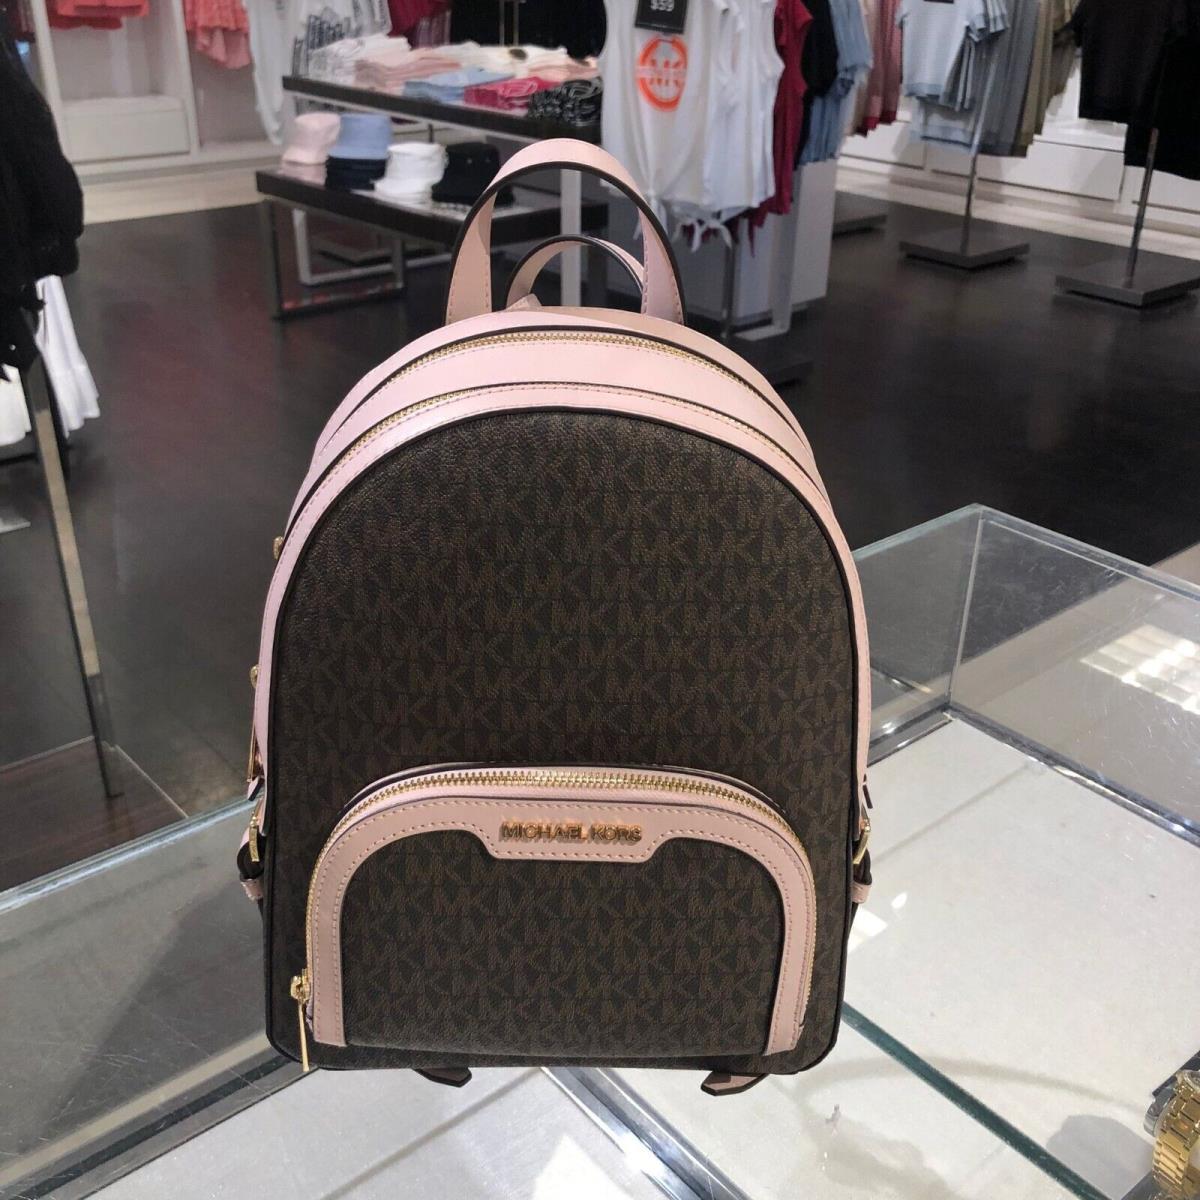 Michael Kors Women Girls Medium School Travel Shoulder Backpack Bag Satchel -var POWDER BLUSH MULTI